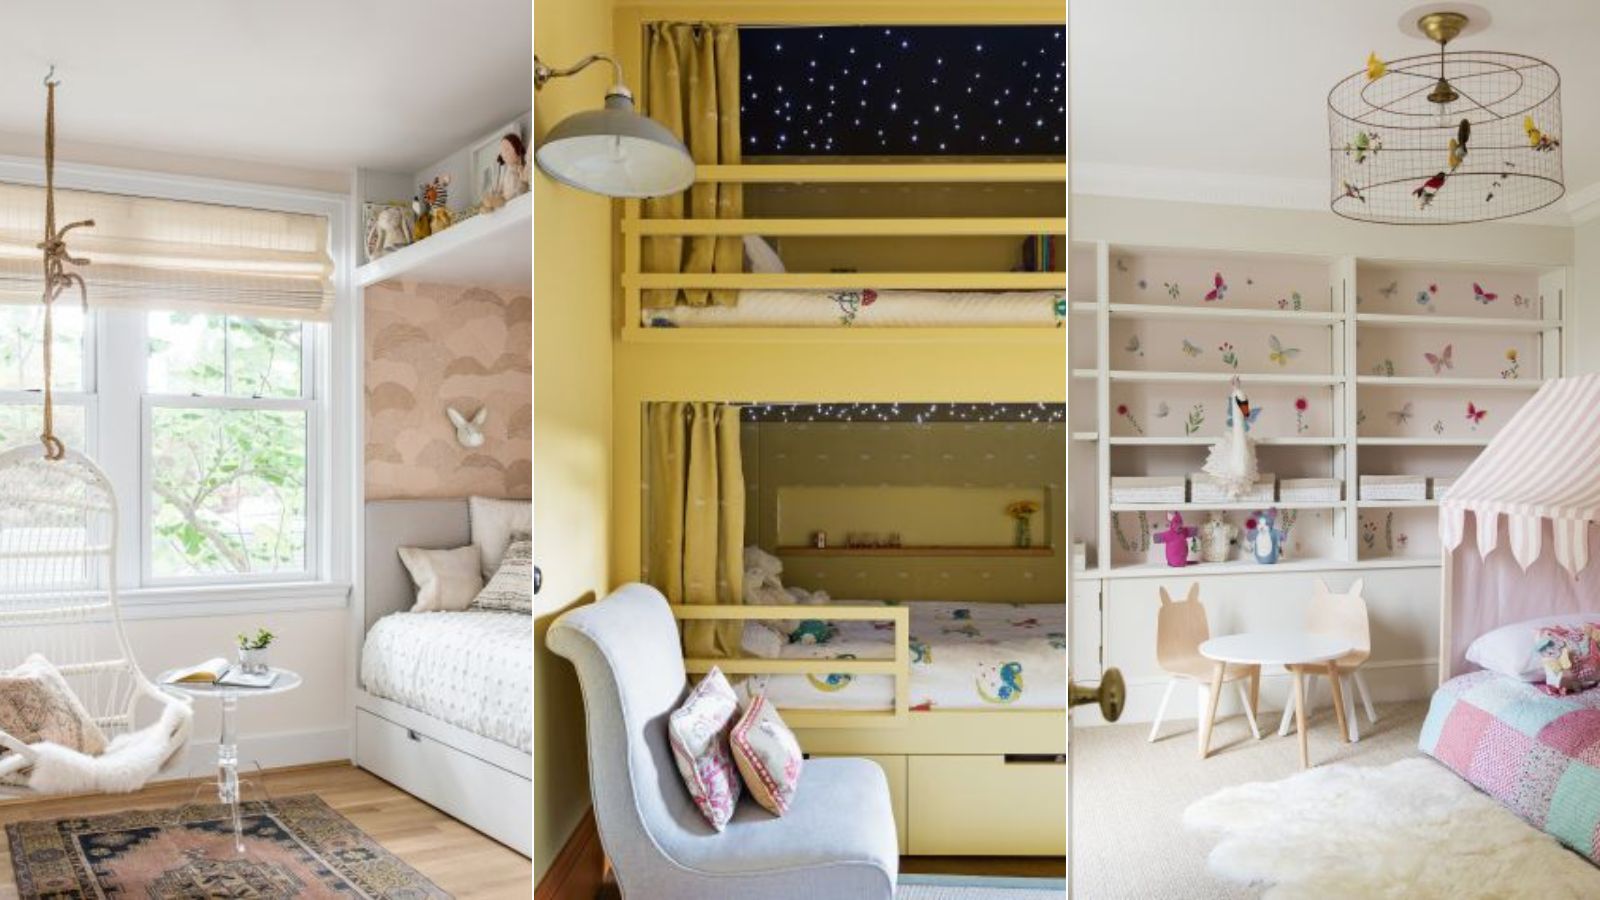 Children’s small bedroom ideas – 5 space-smart designs